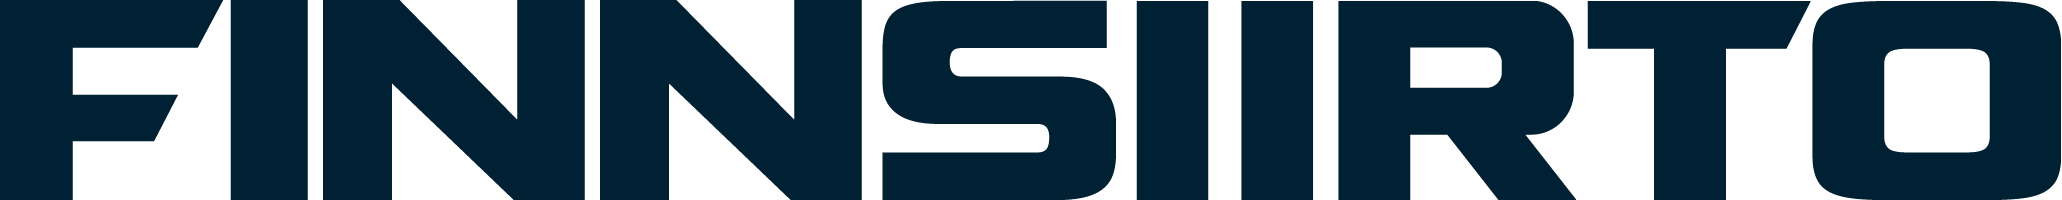 finnsiirto-logo-blue-1